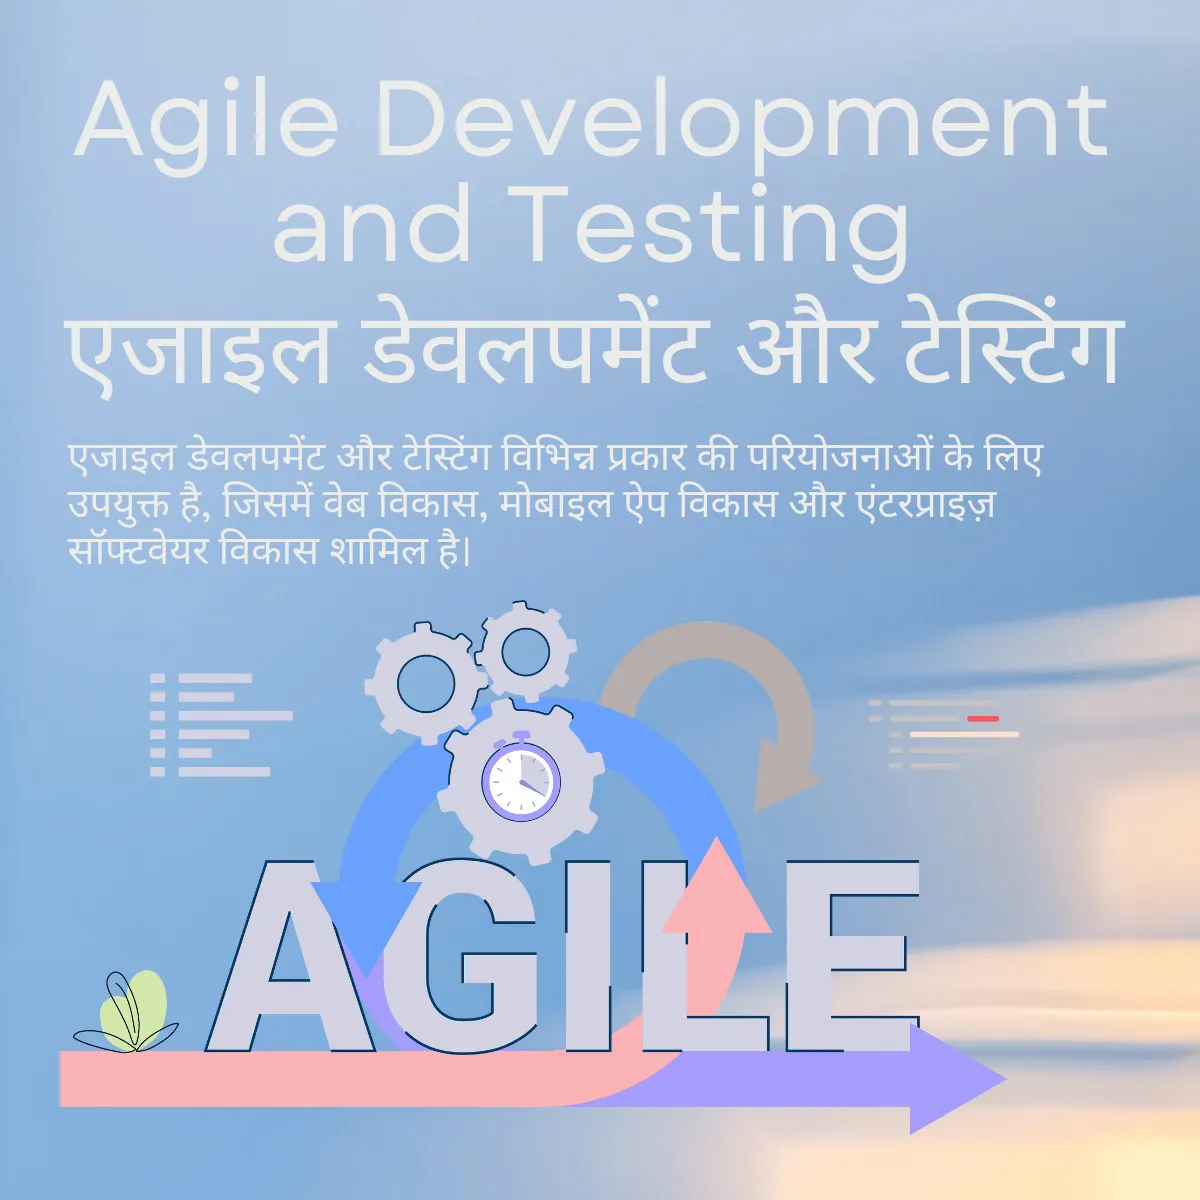 Agile Development and Testing